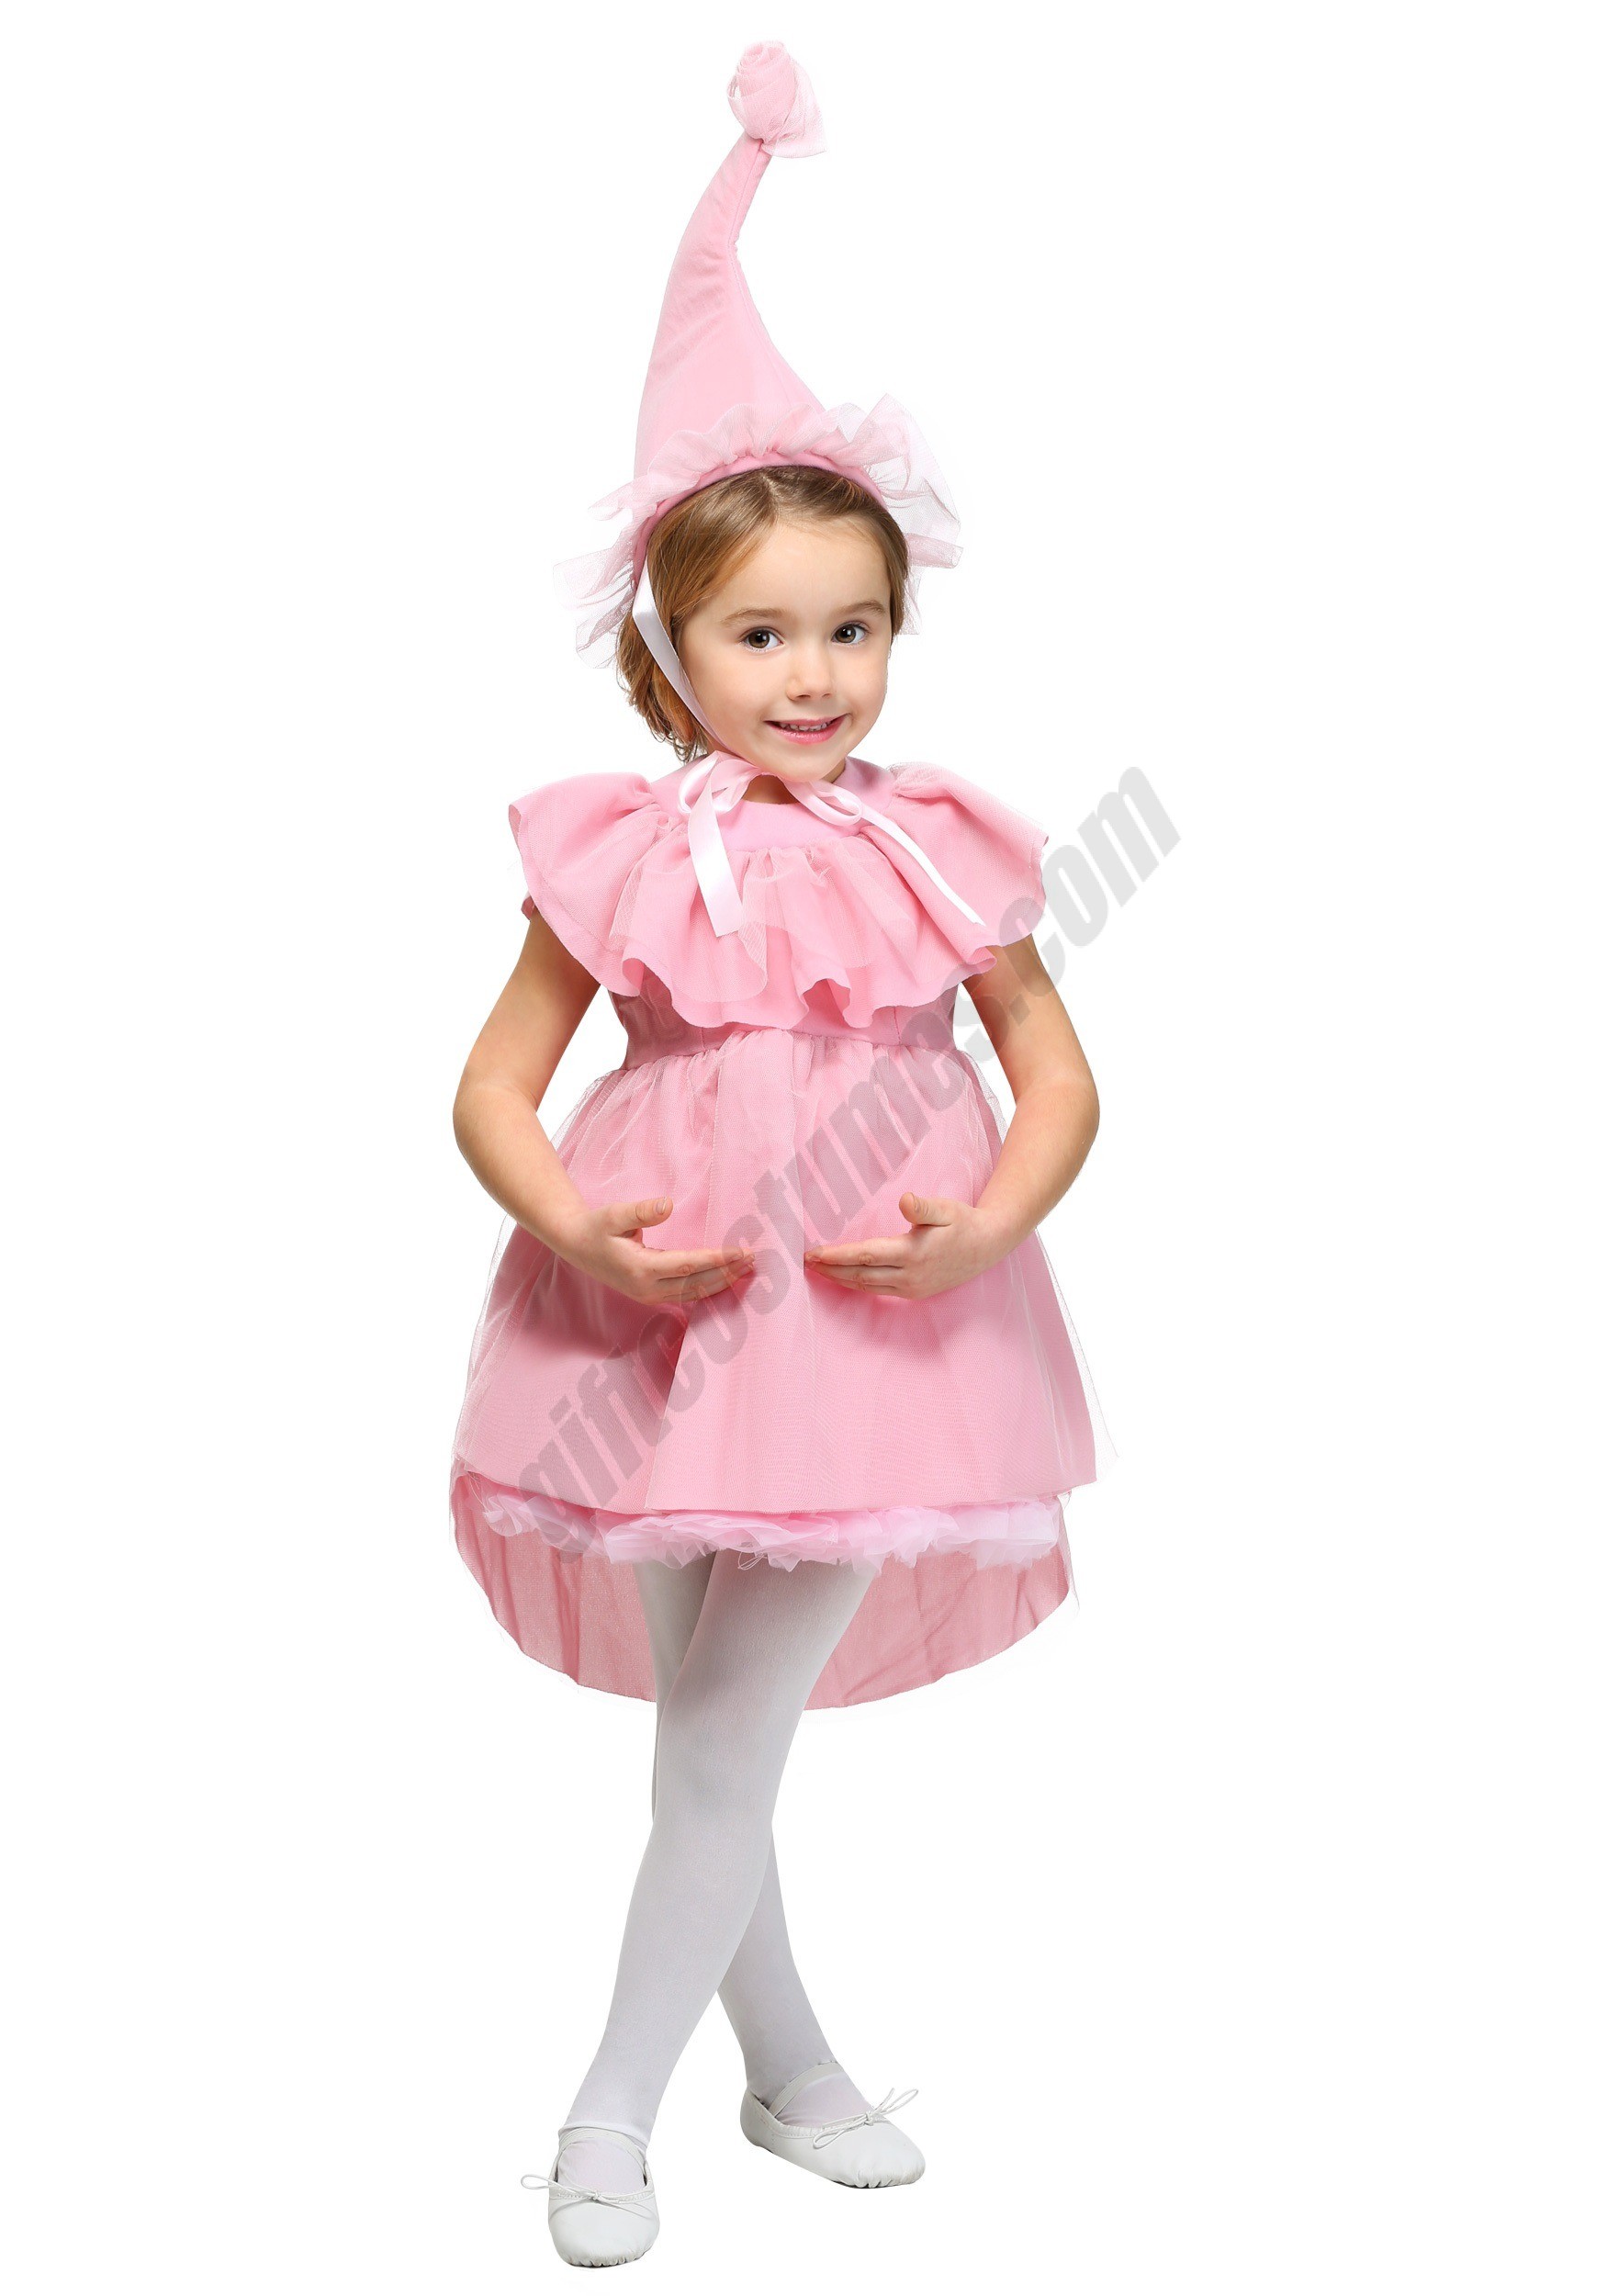 Toddler Munchkin Ballerina Costume Promotions - Toddler Munchkin Ballerina Costume Promotions